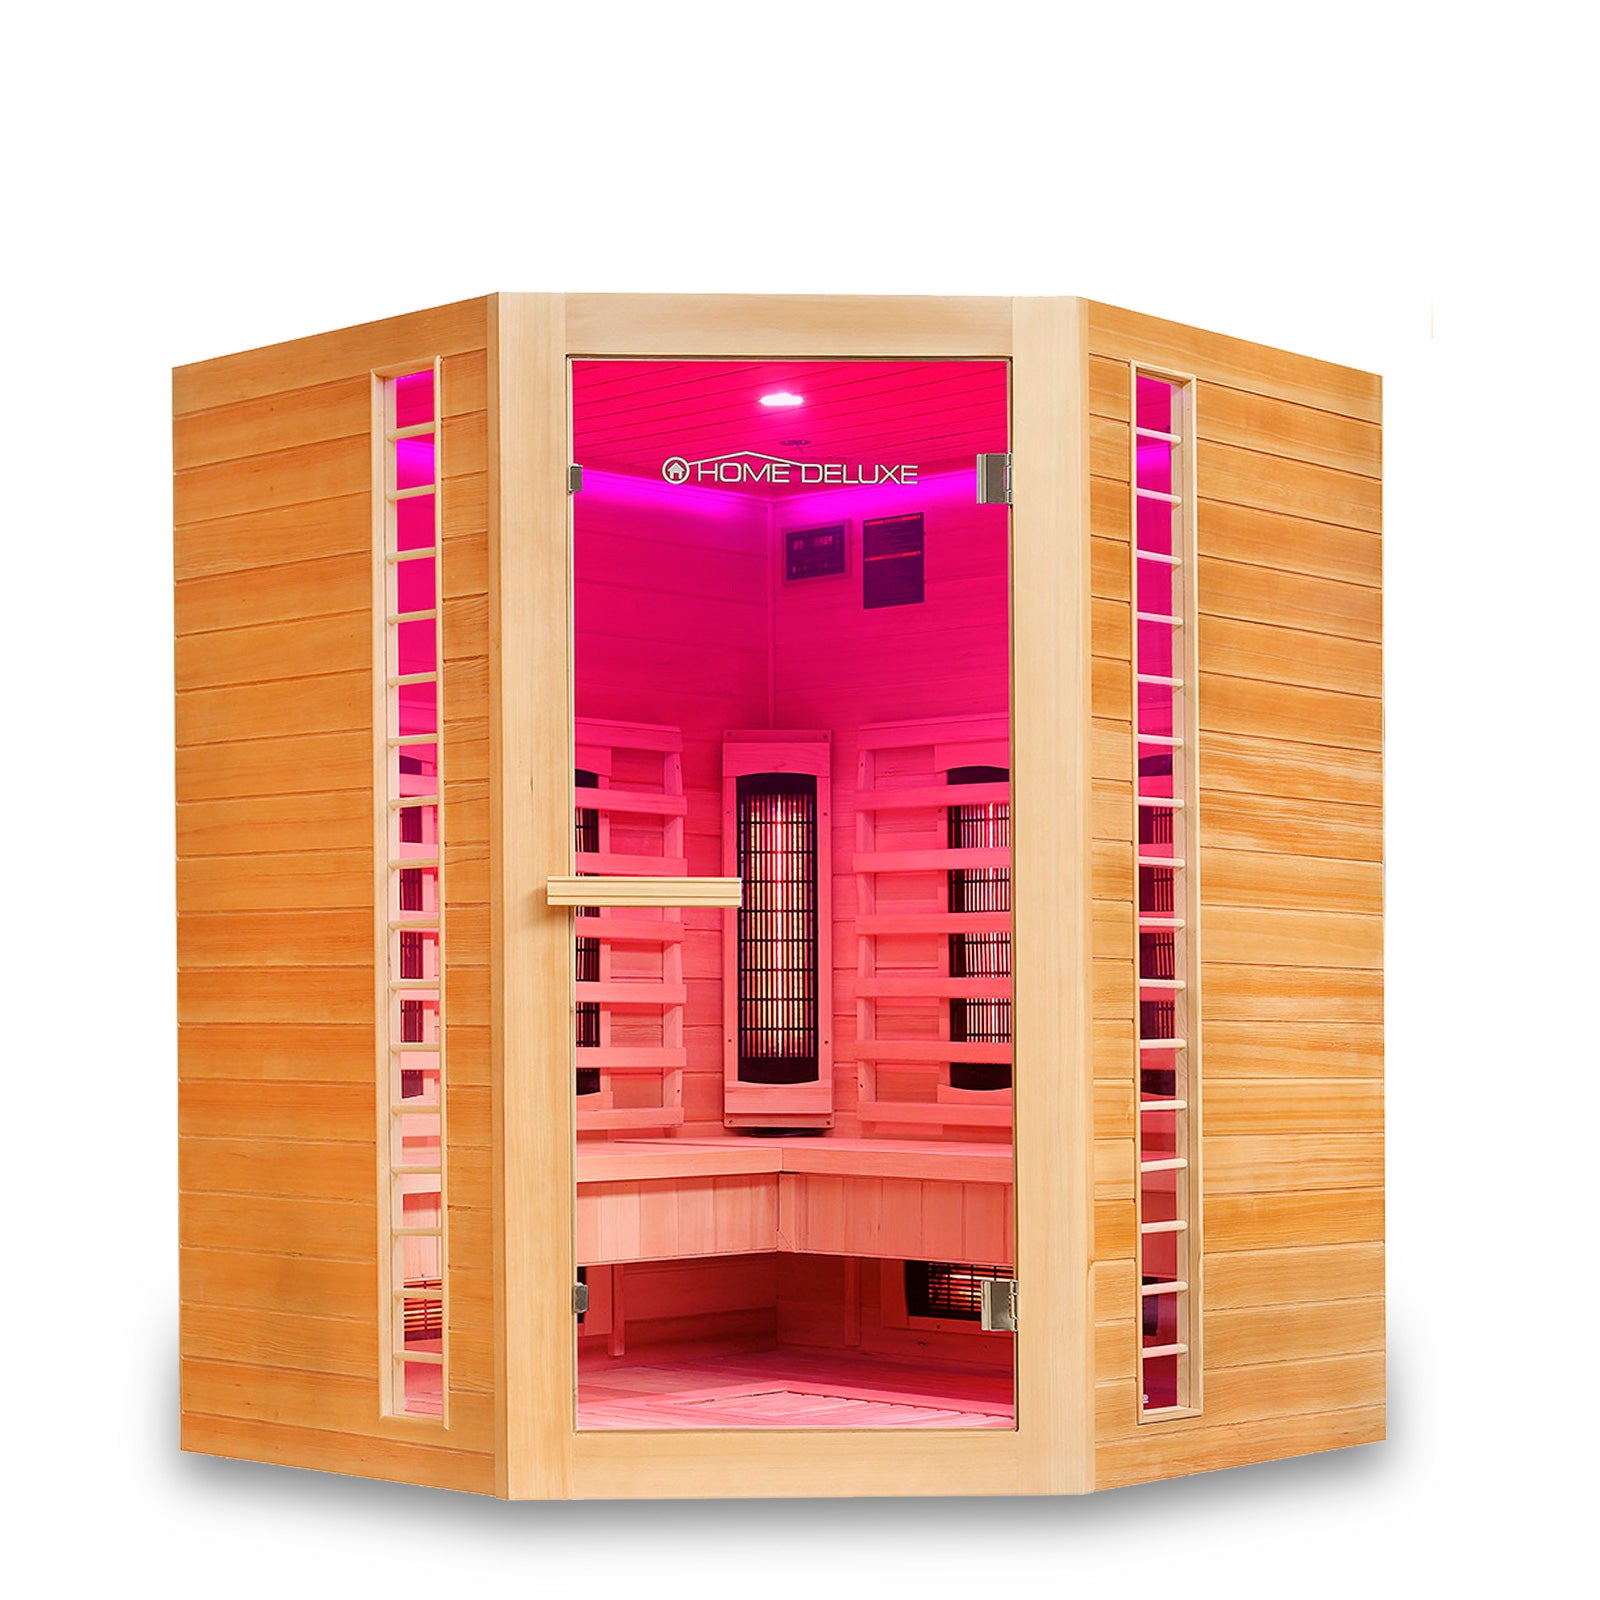 sauna na podczerwień sauna tanio sauna warszawa